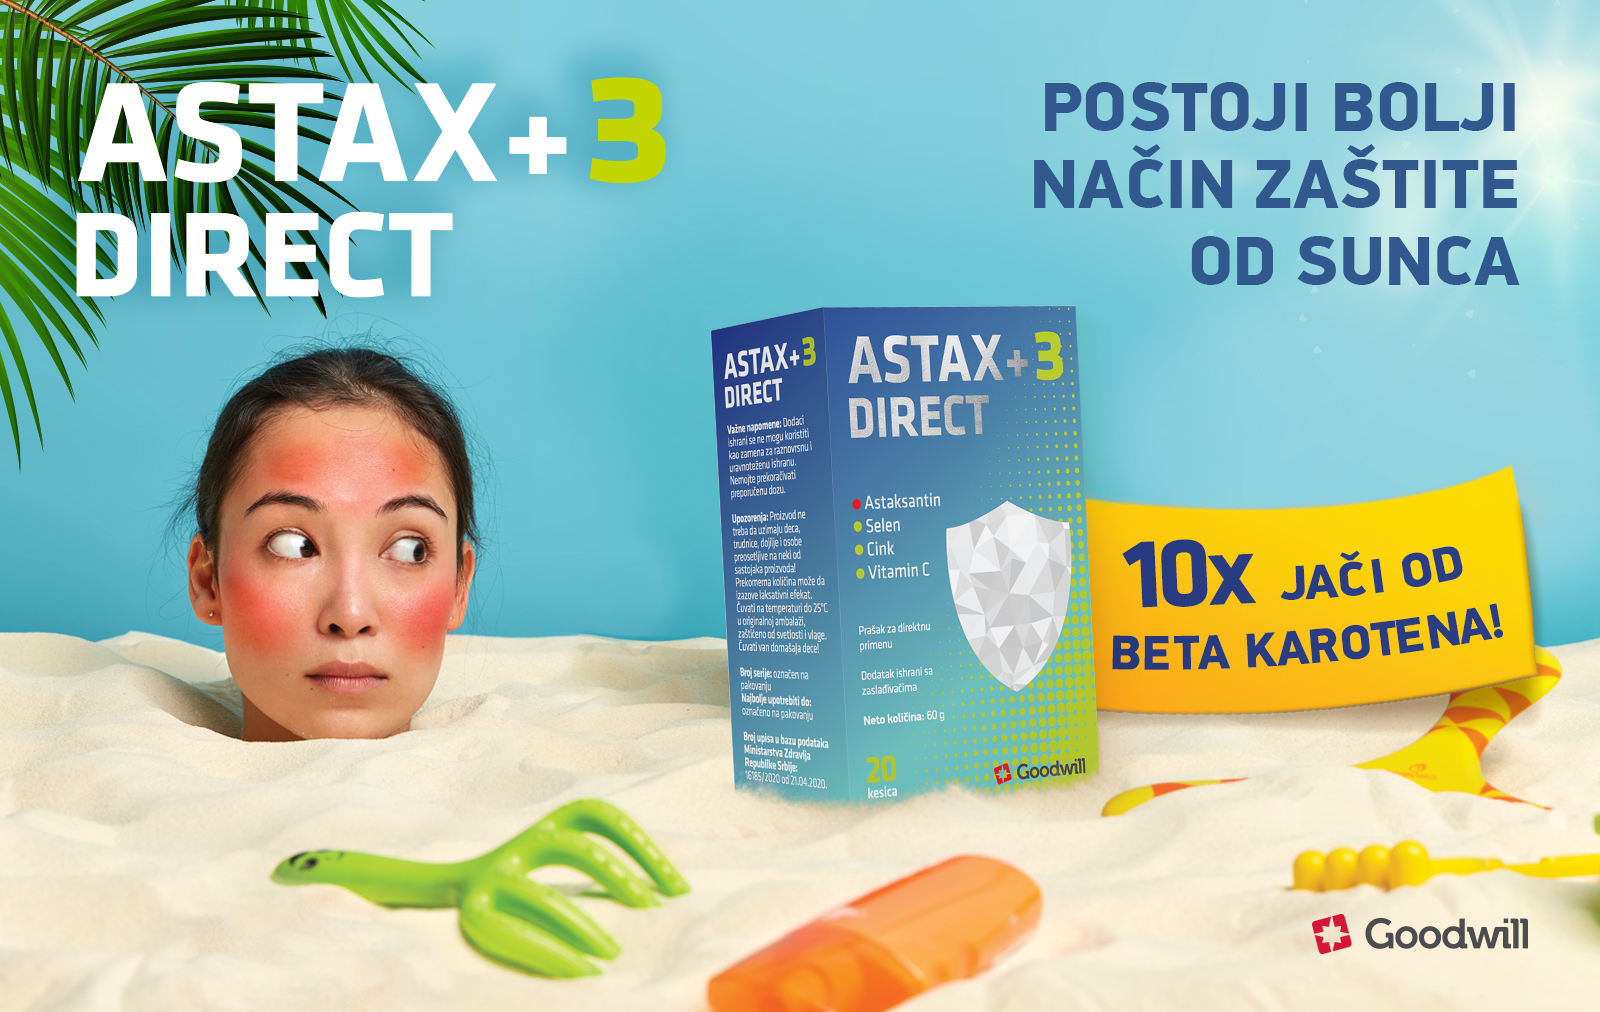 ASTAX+3 DIRECT